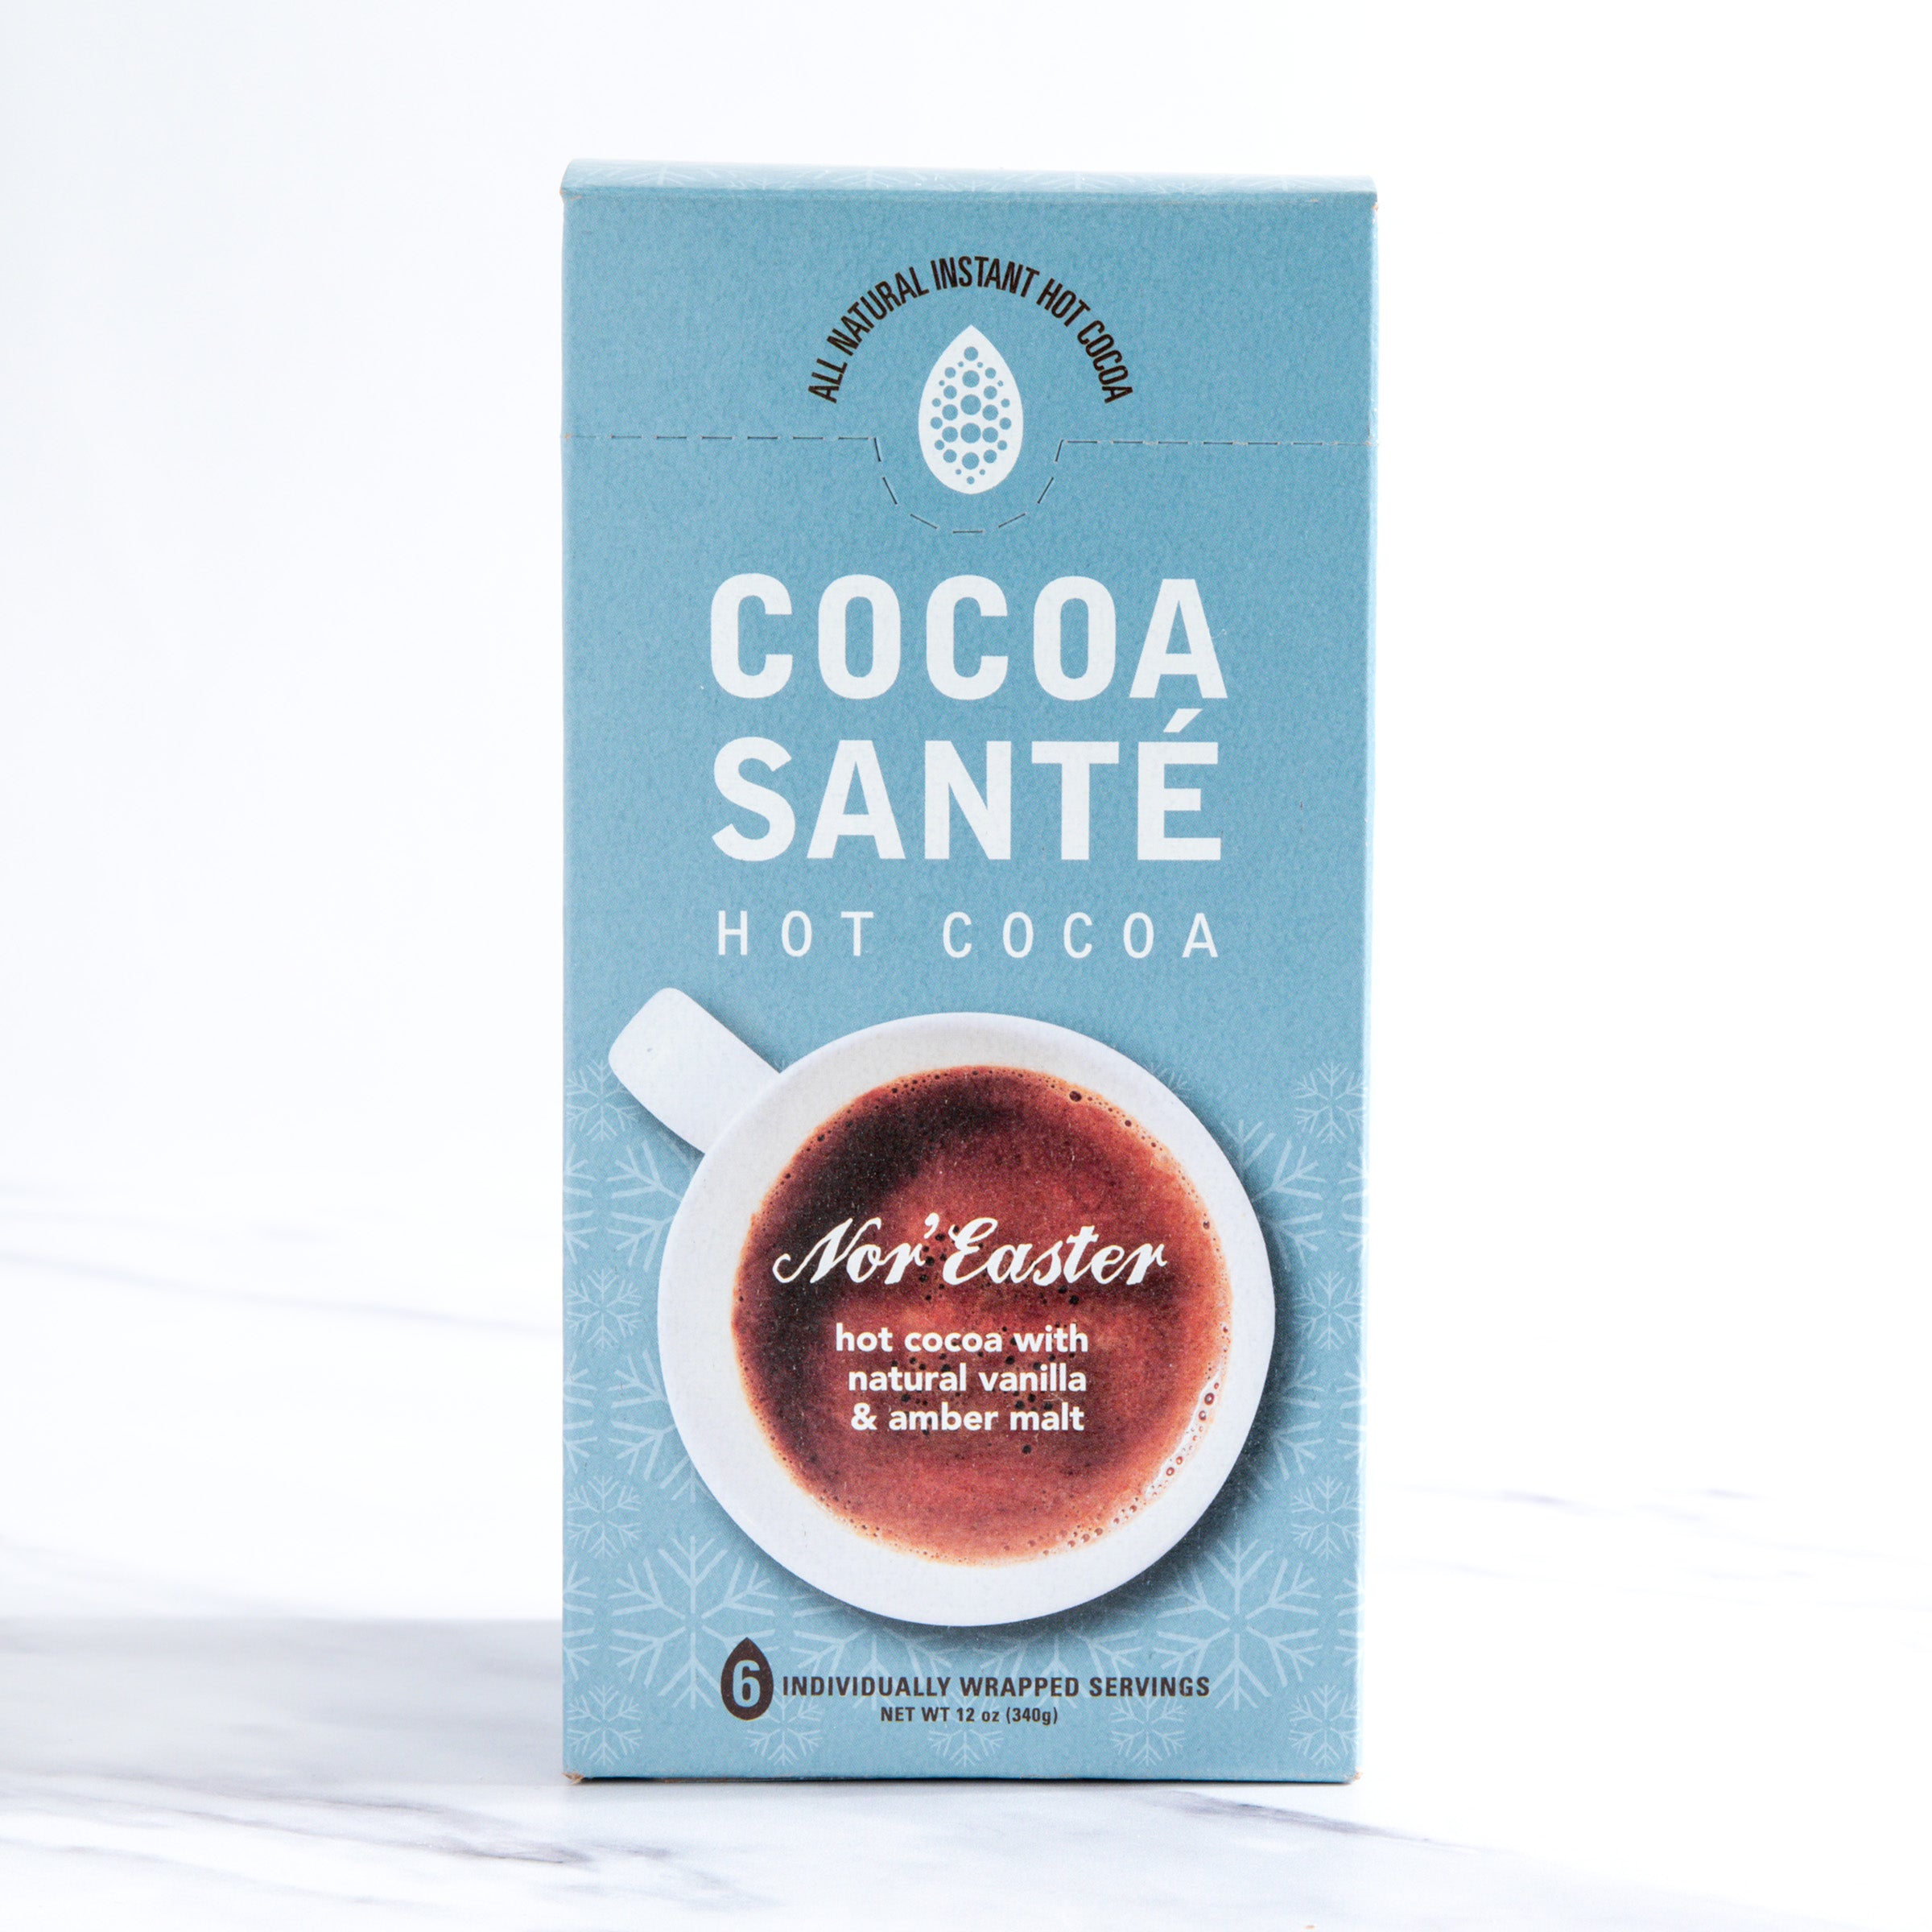 igourmet_4569_Cocoa Sante_Hot Cocoa Mix in Box_Hot Chocolate